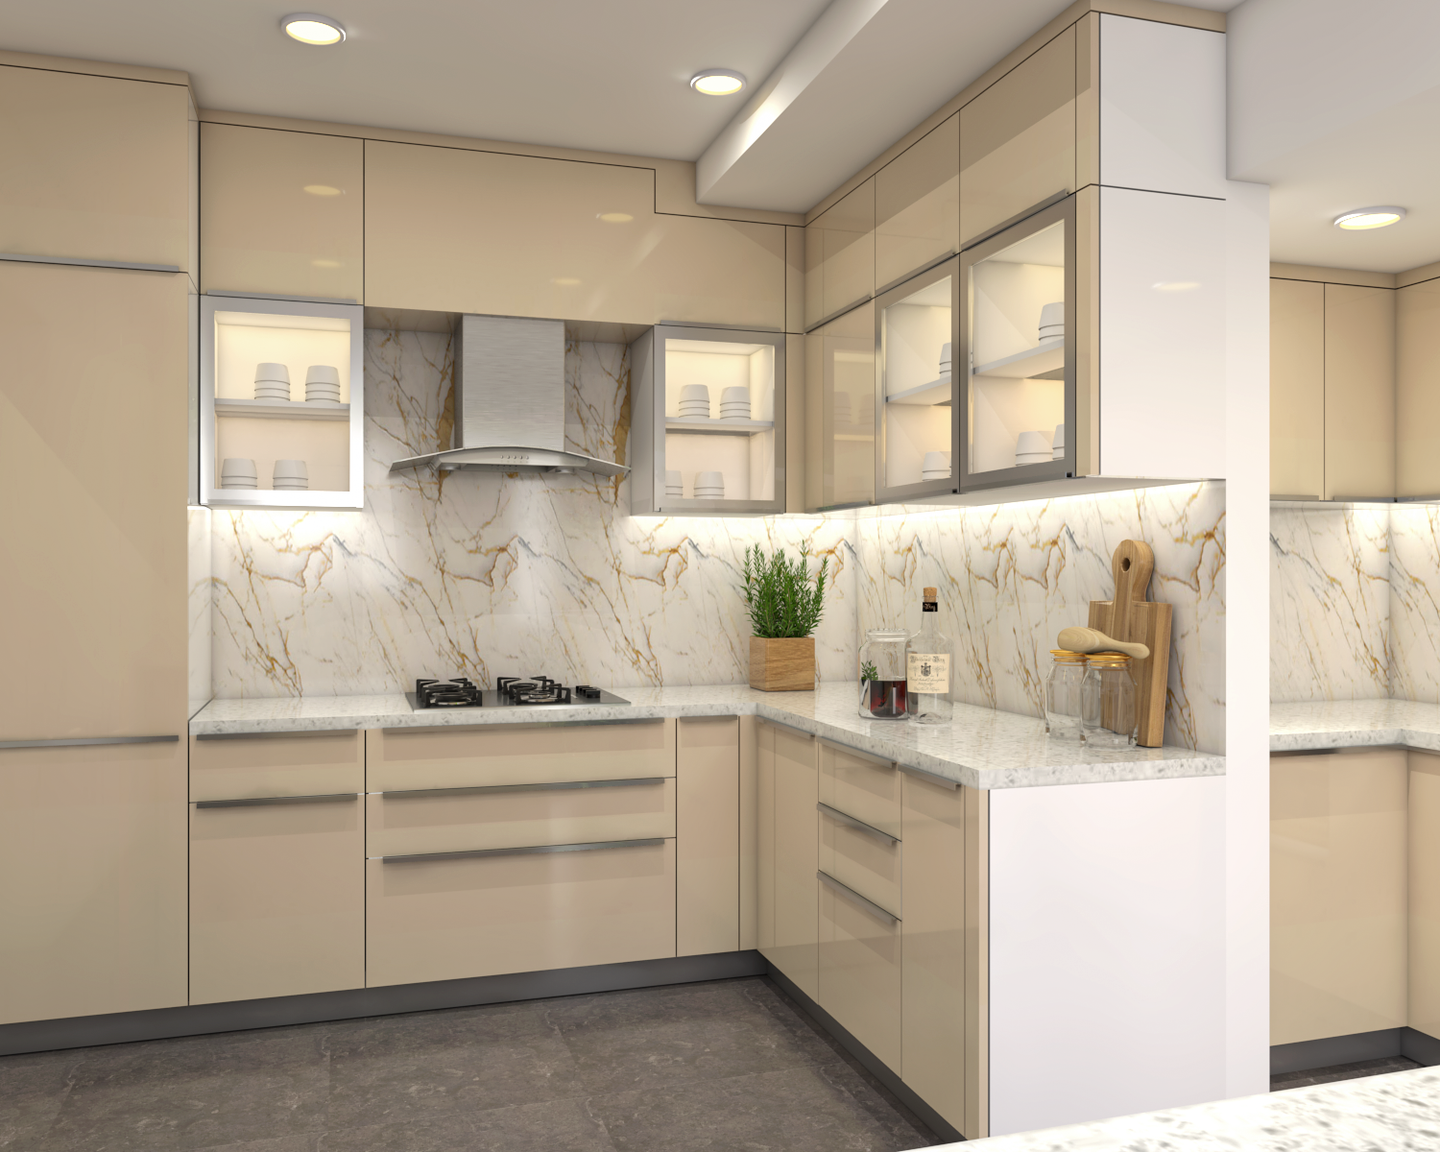 Contemporary Modular Kitchen Design in Beige Tone - Livspace